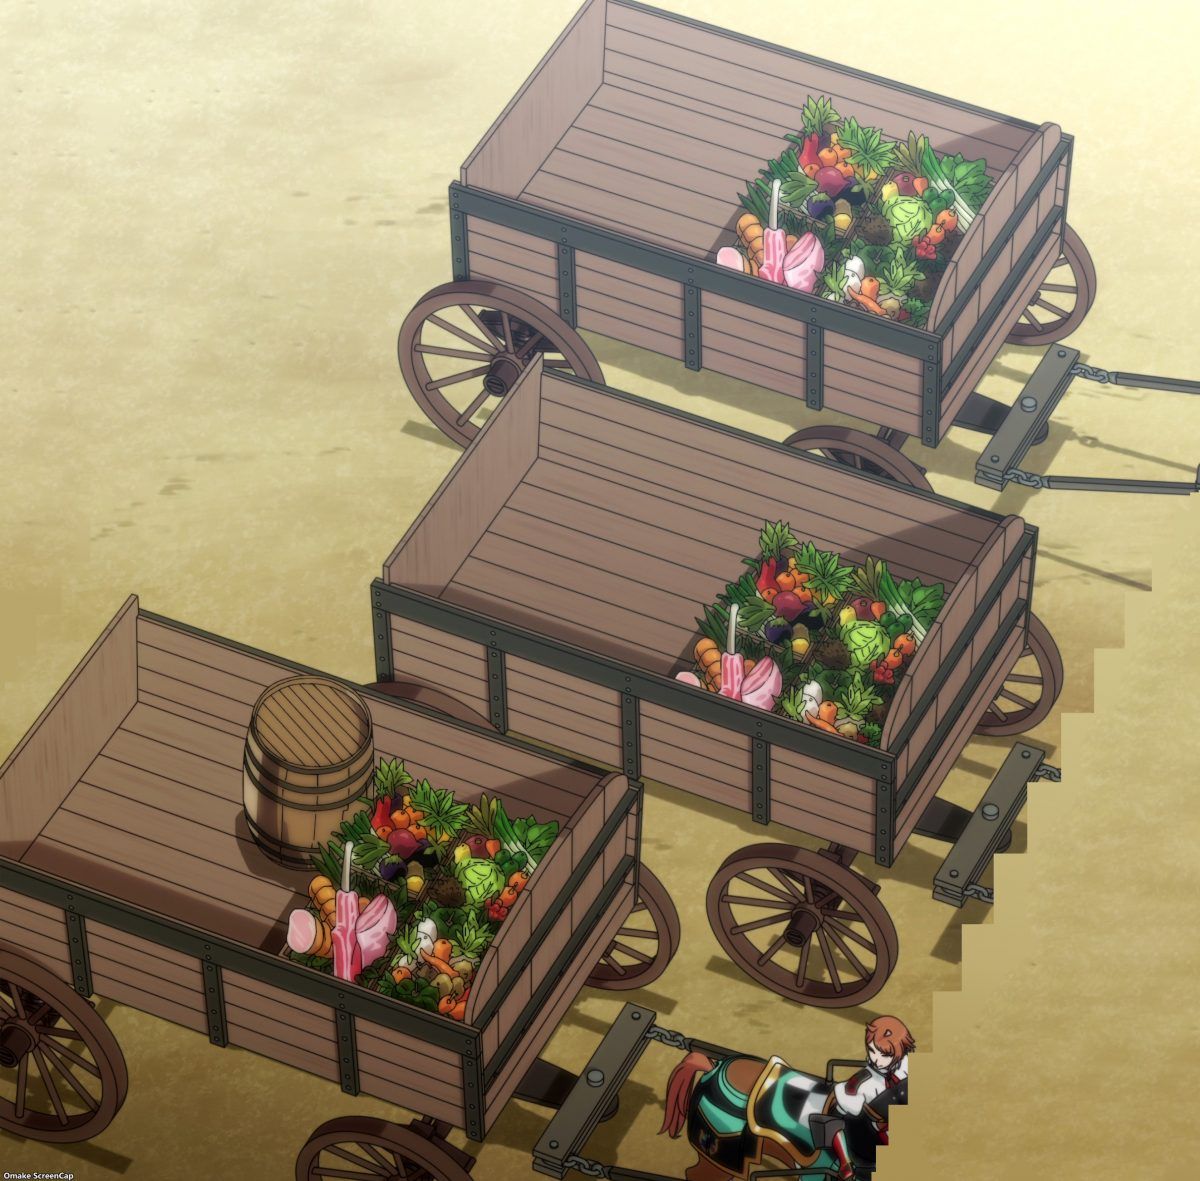 Monster Musume No Oisha San Episode 12 [END] Centaur Wagons Full Of Food Gifts